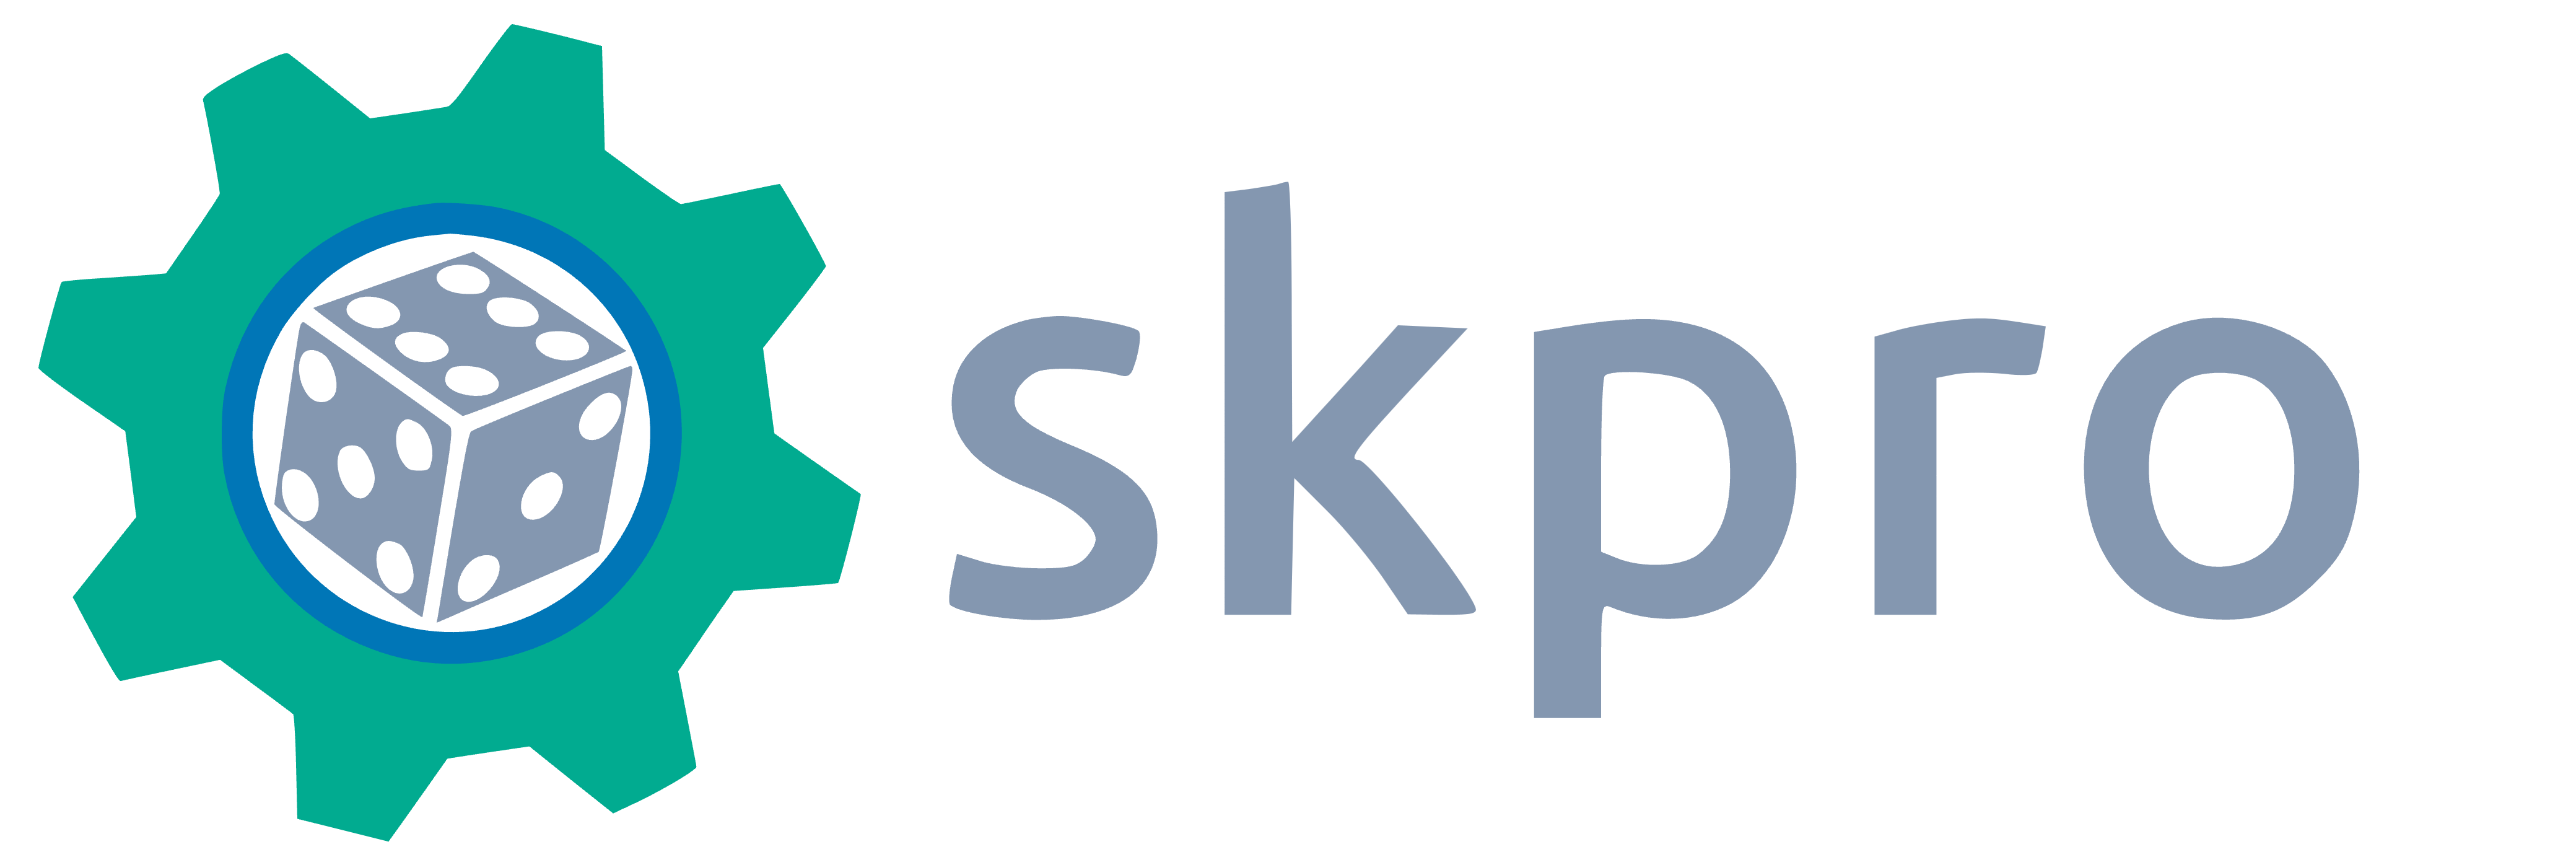 skpro 2.2.2 documentation - Home